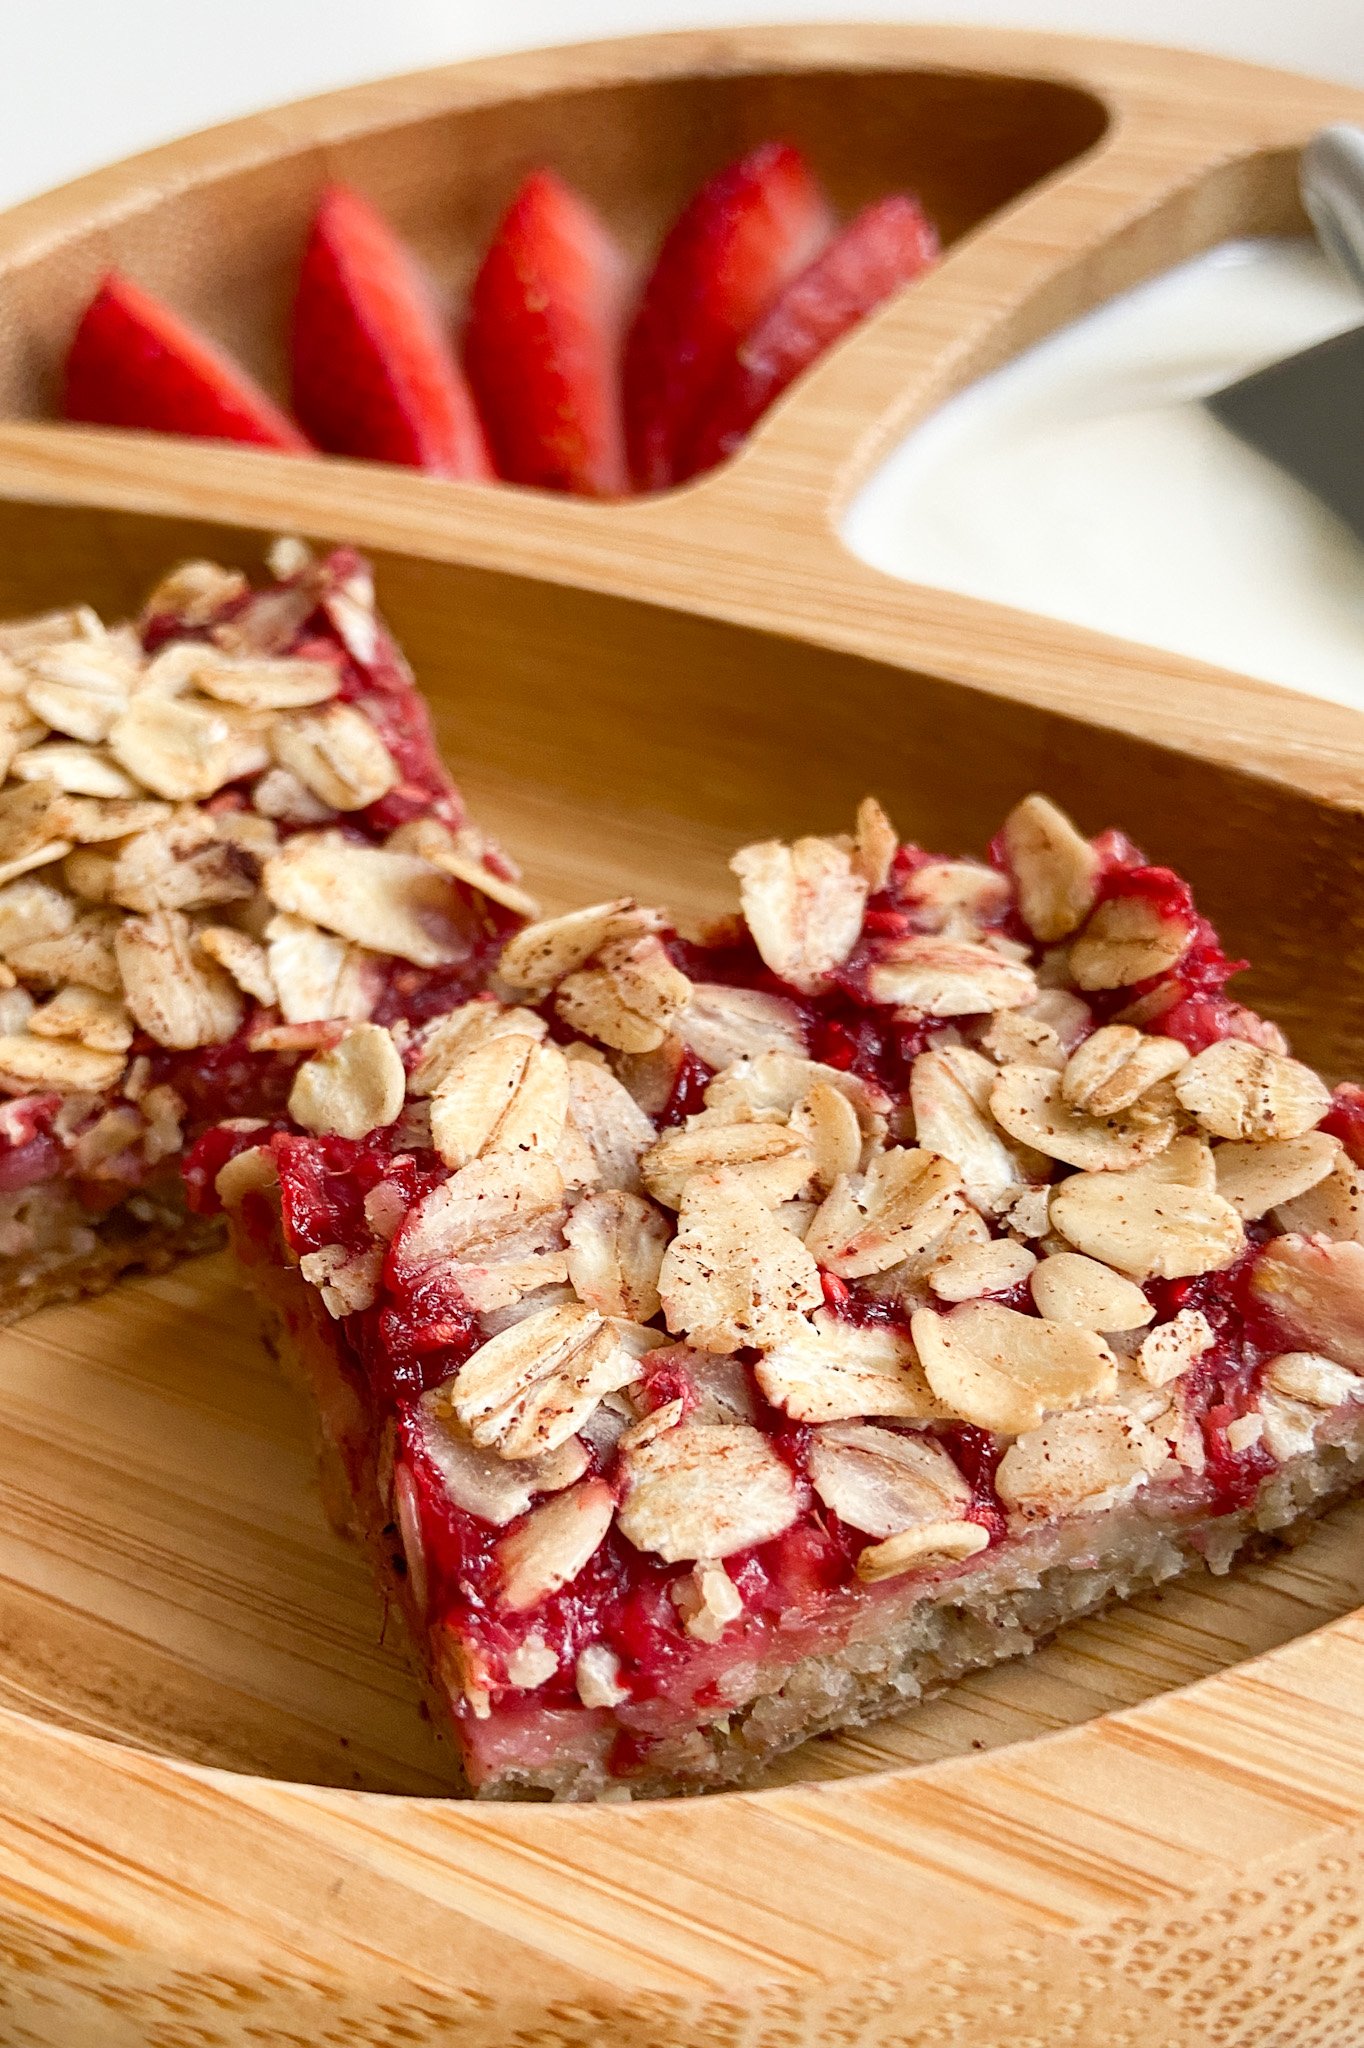 Raspberry oat bars plated with sliced strawberries and yogurt.